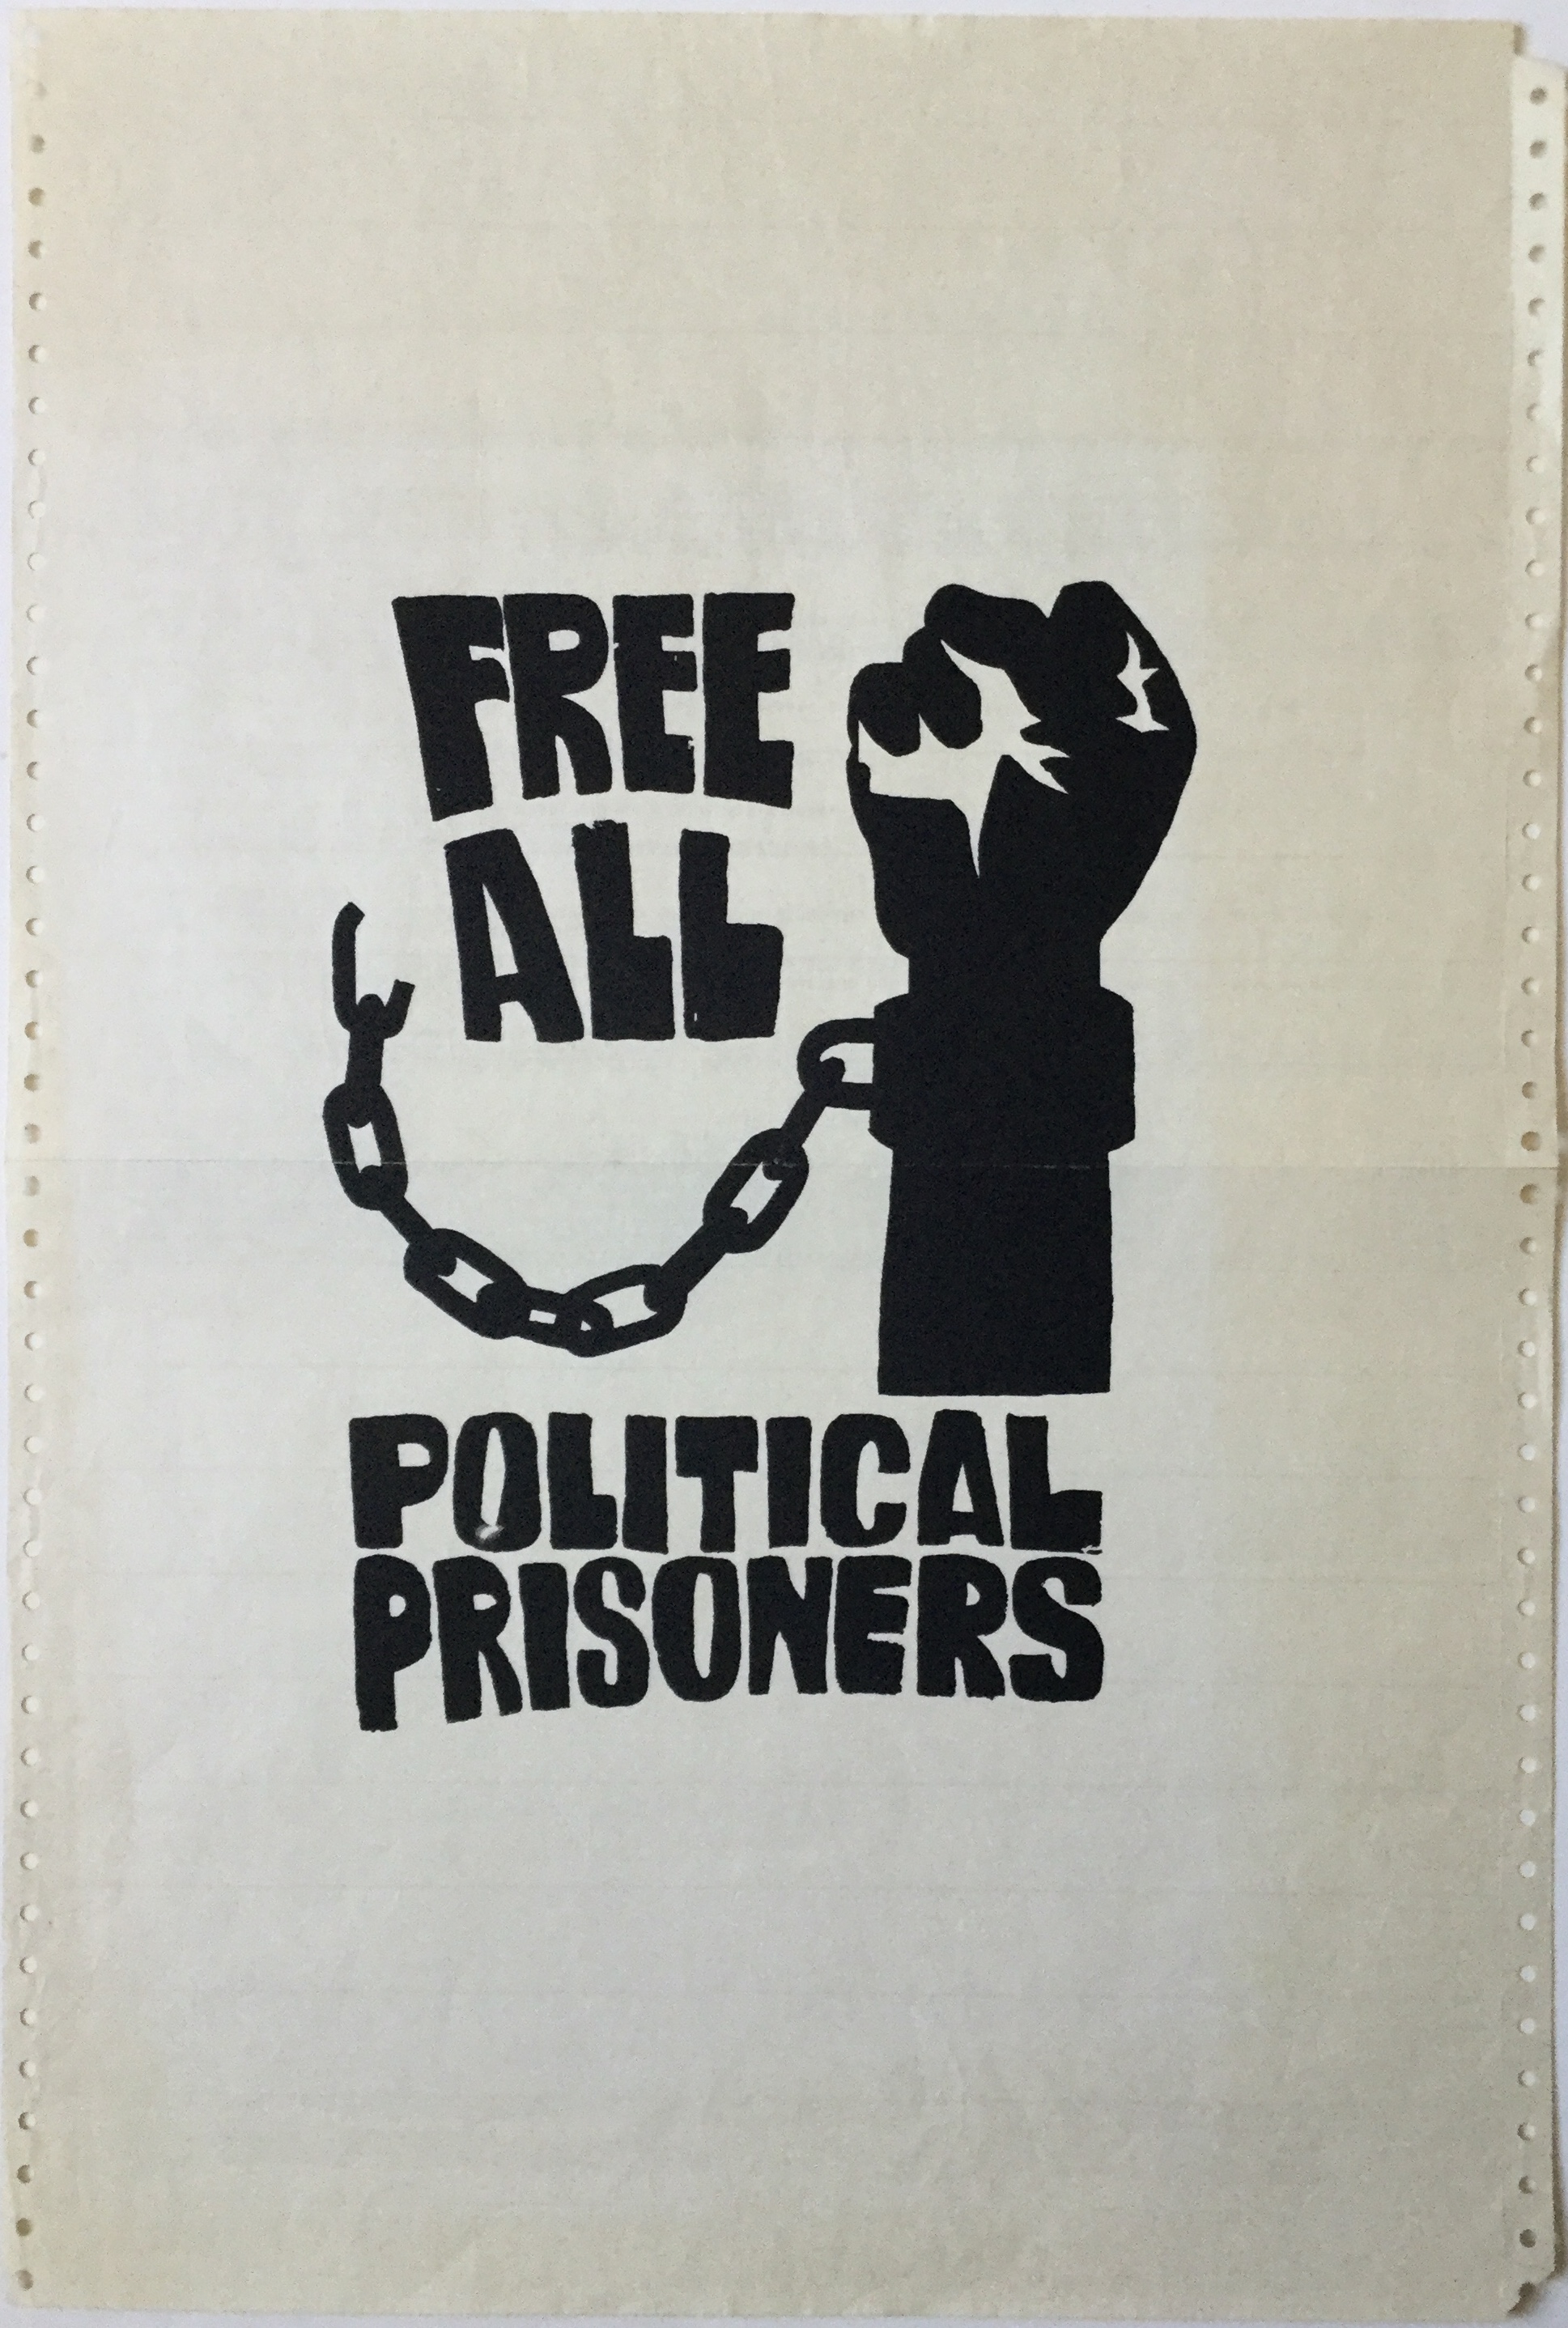 J476	FREE ALL POLITICAL PRISONERS